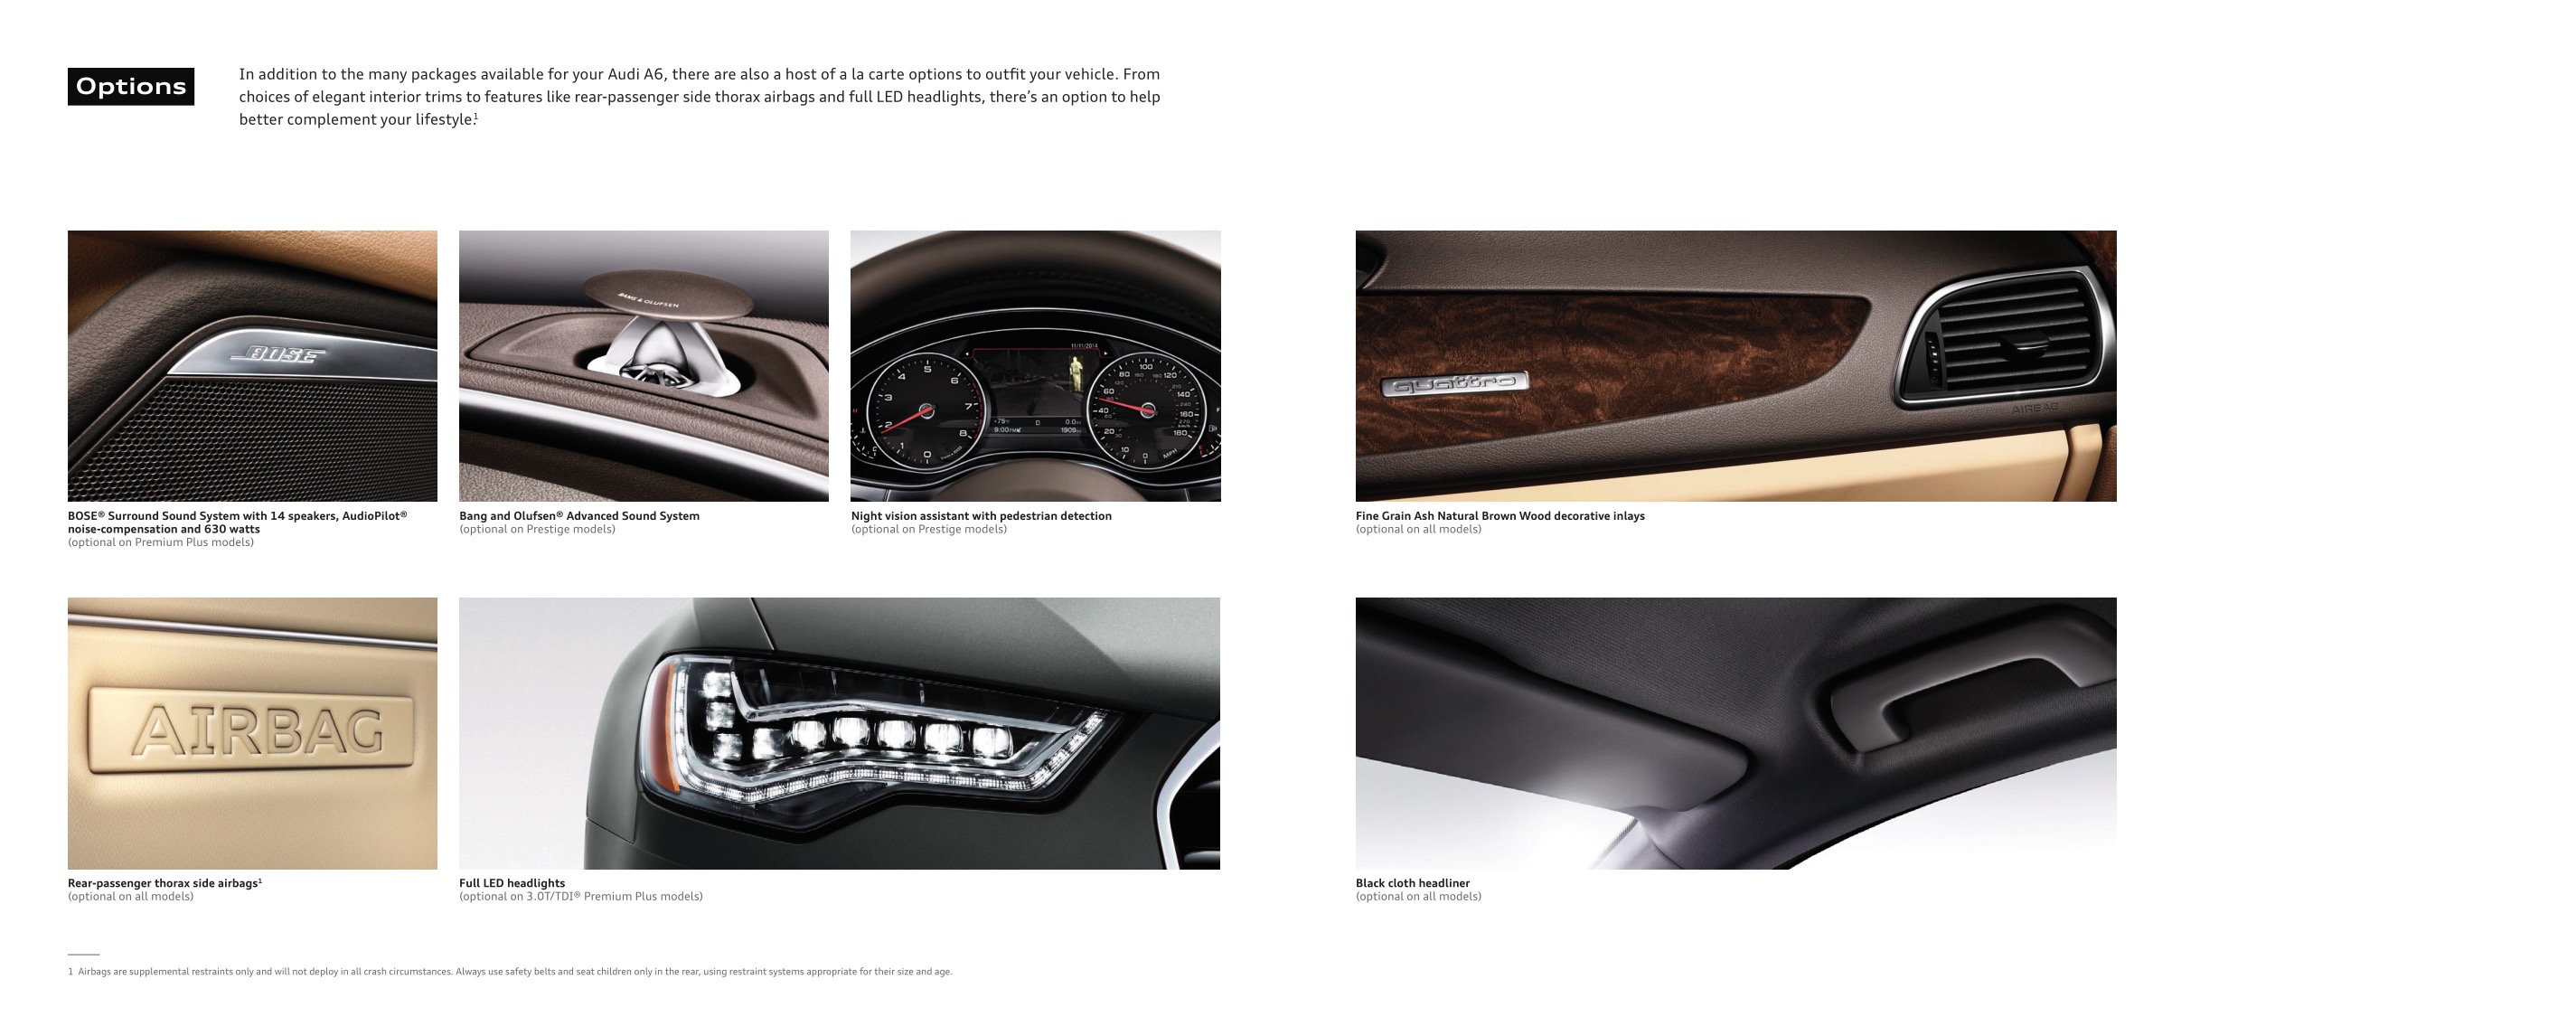 2015 Audi A6 Brochure Page 3